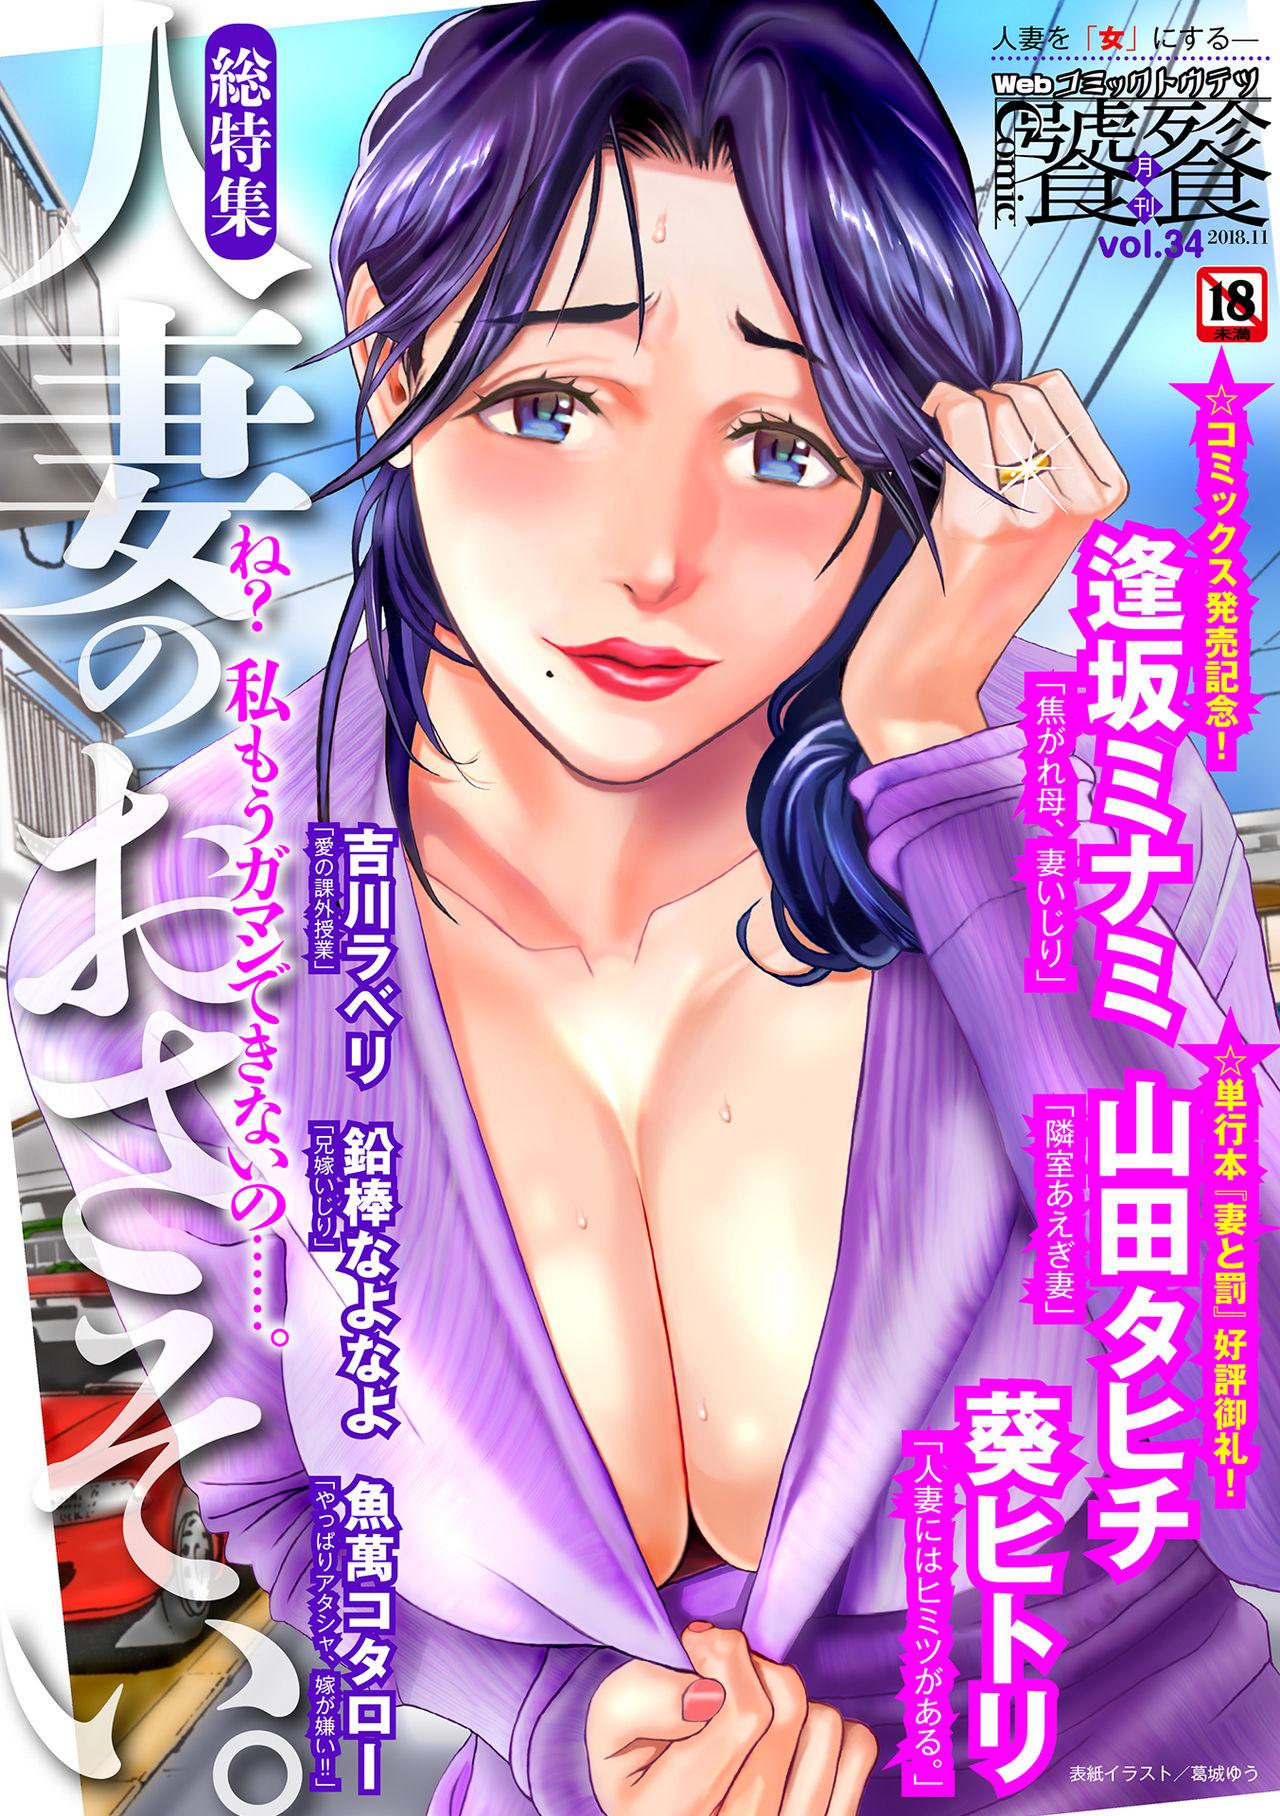 Curious Web Comic Toutetsu Vol. 34 Free Blow Job Porn - Picture 1